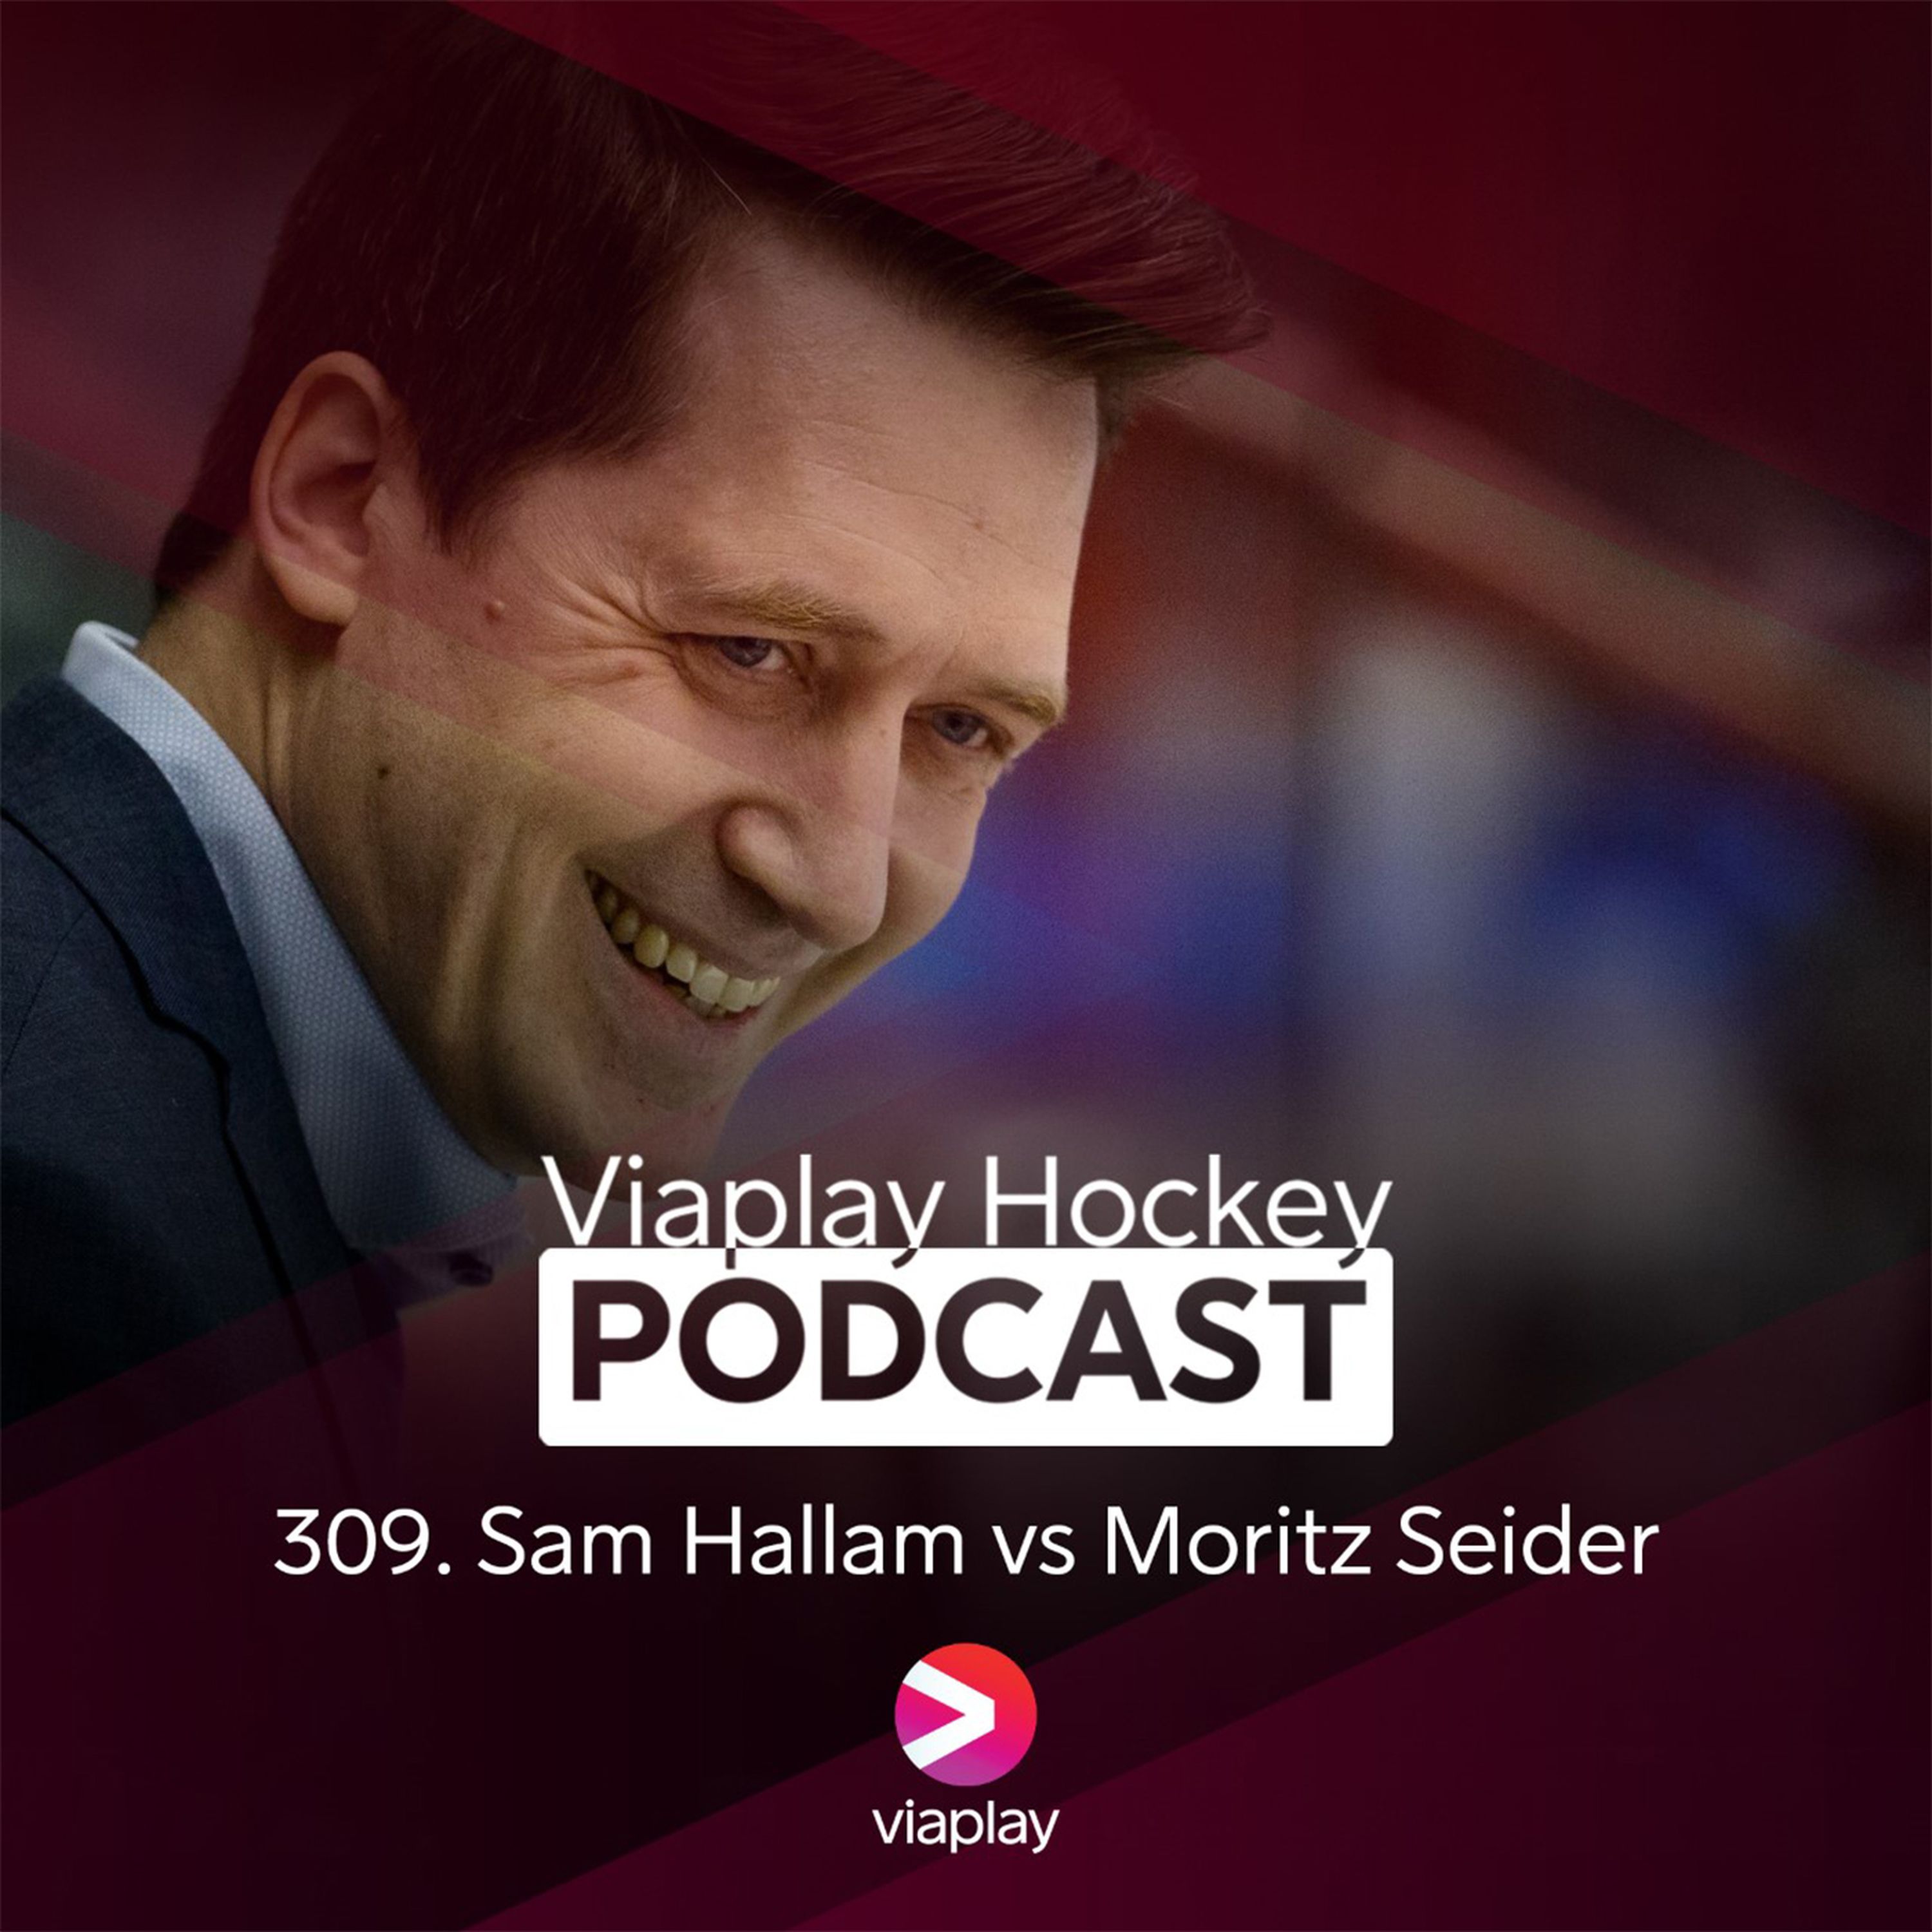 309. Viaplay Hockey Podcast – Sam Hallam vs Moritz Seider